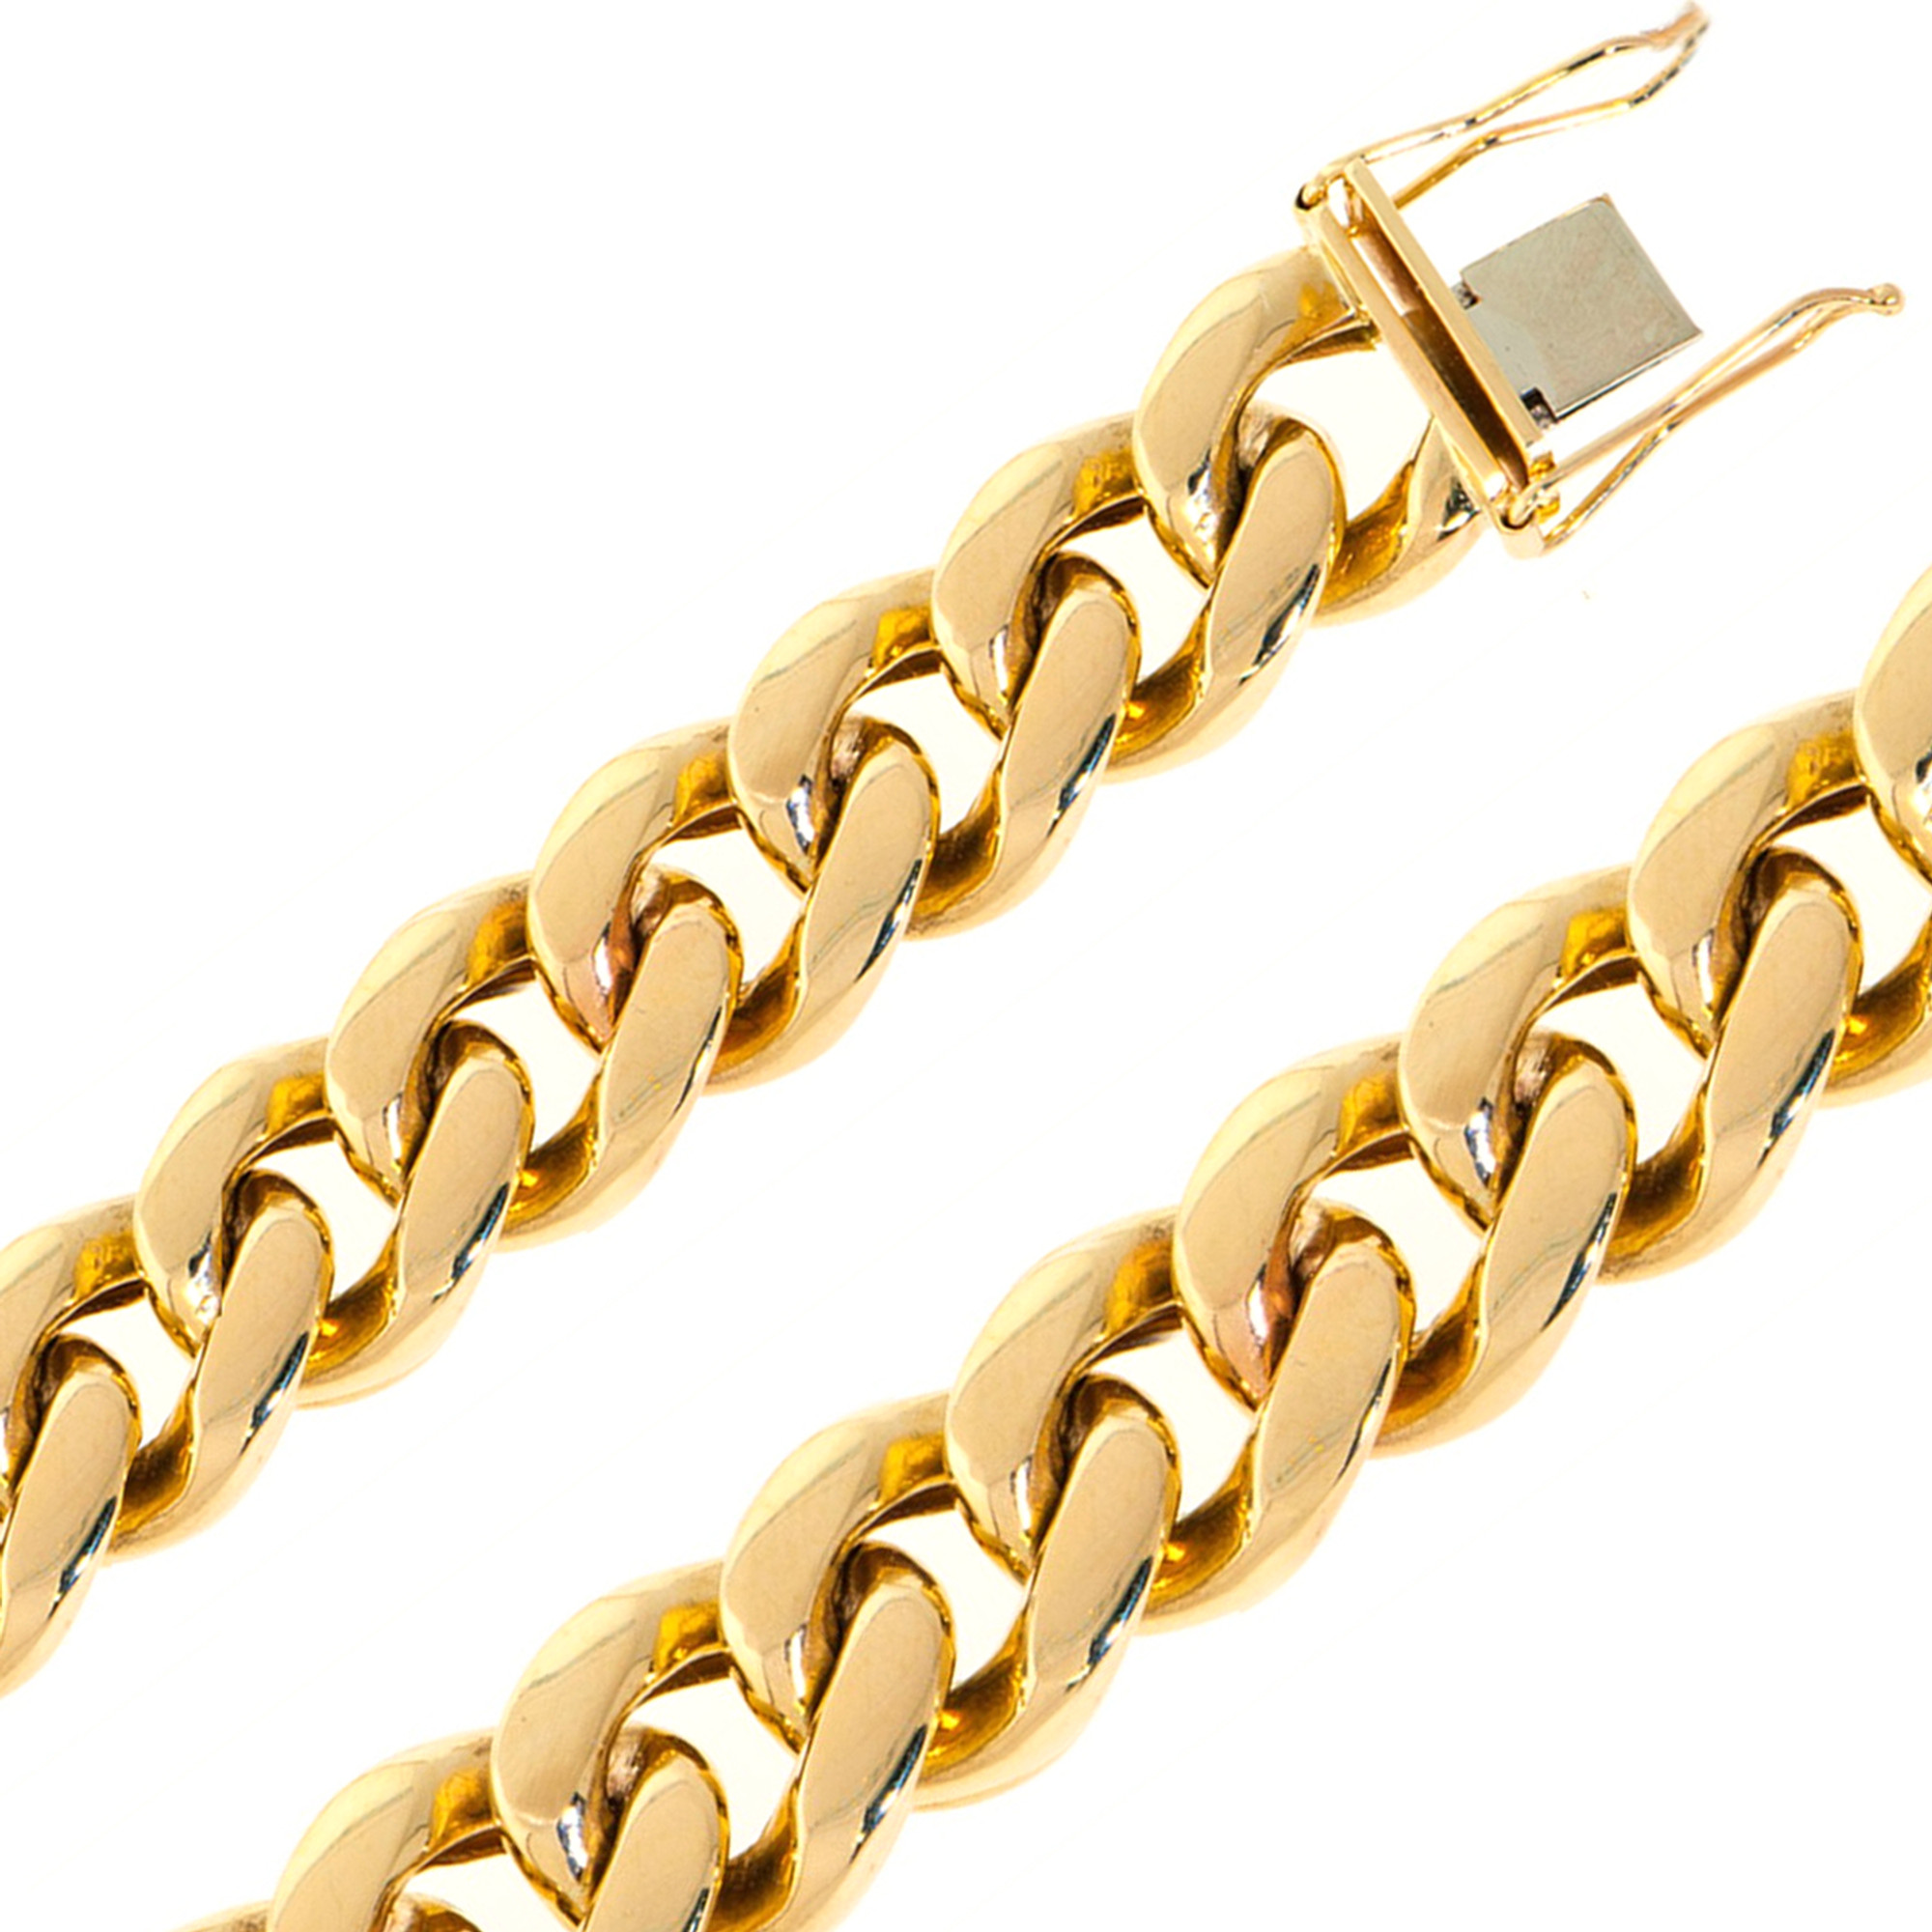 Solid Gold Miami Cuban Link Bracelet, 8 inch length